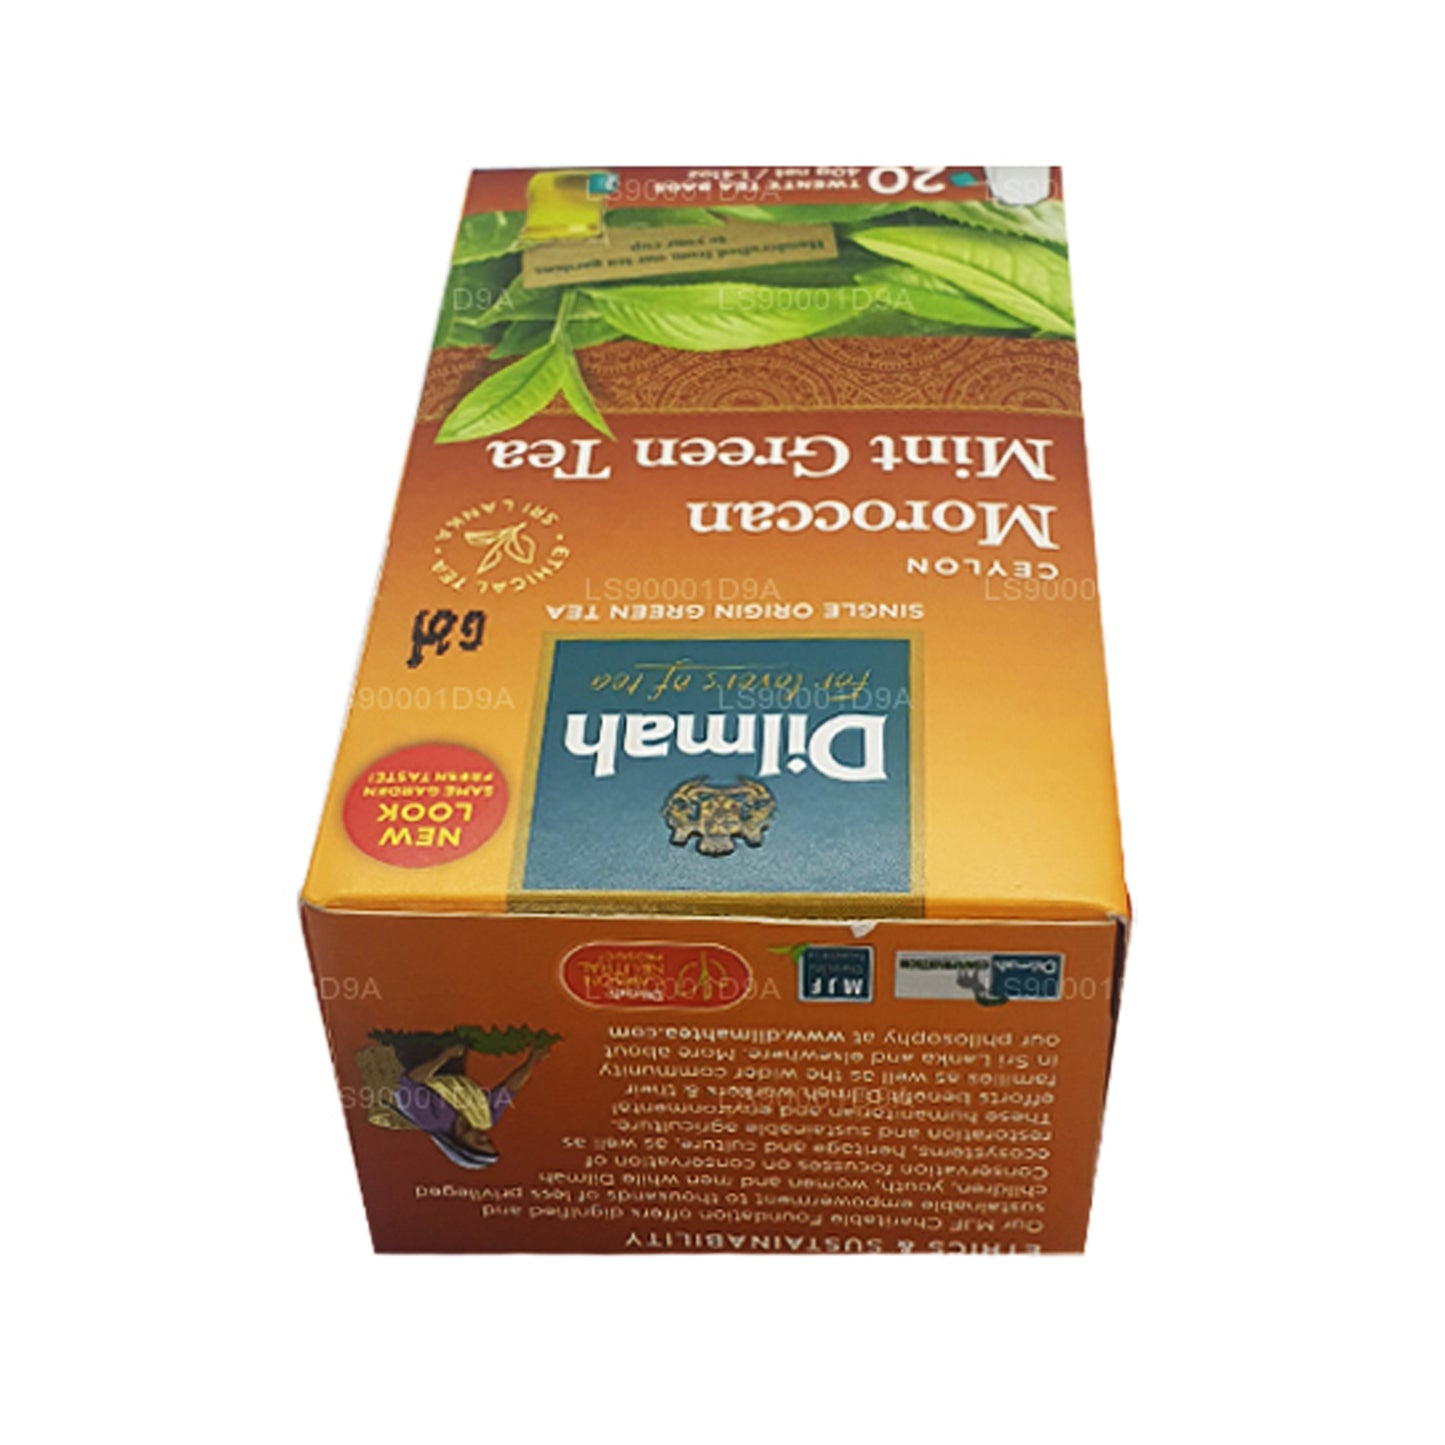 Dilmah Ceylon Moroccan Mint Green Tea (40g) 20 Tea Bags